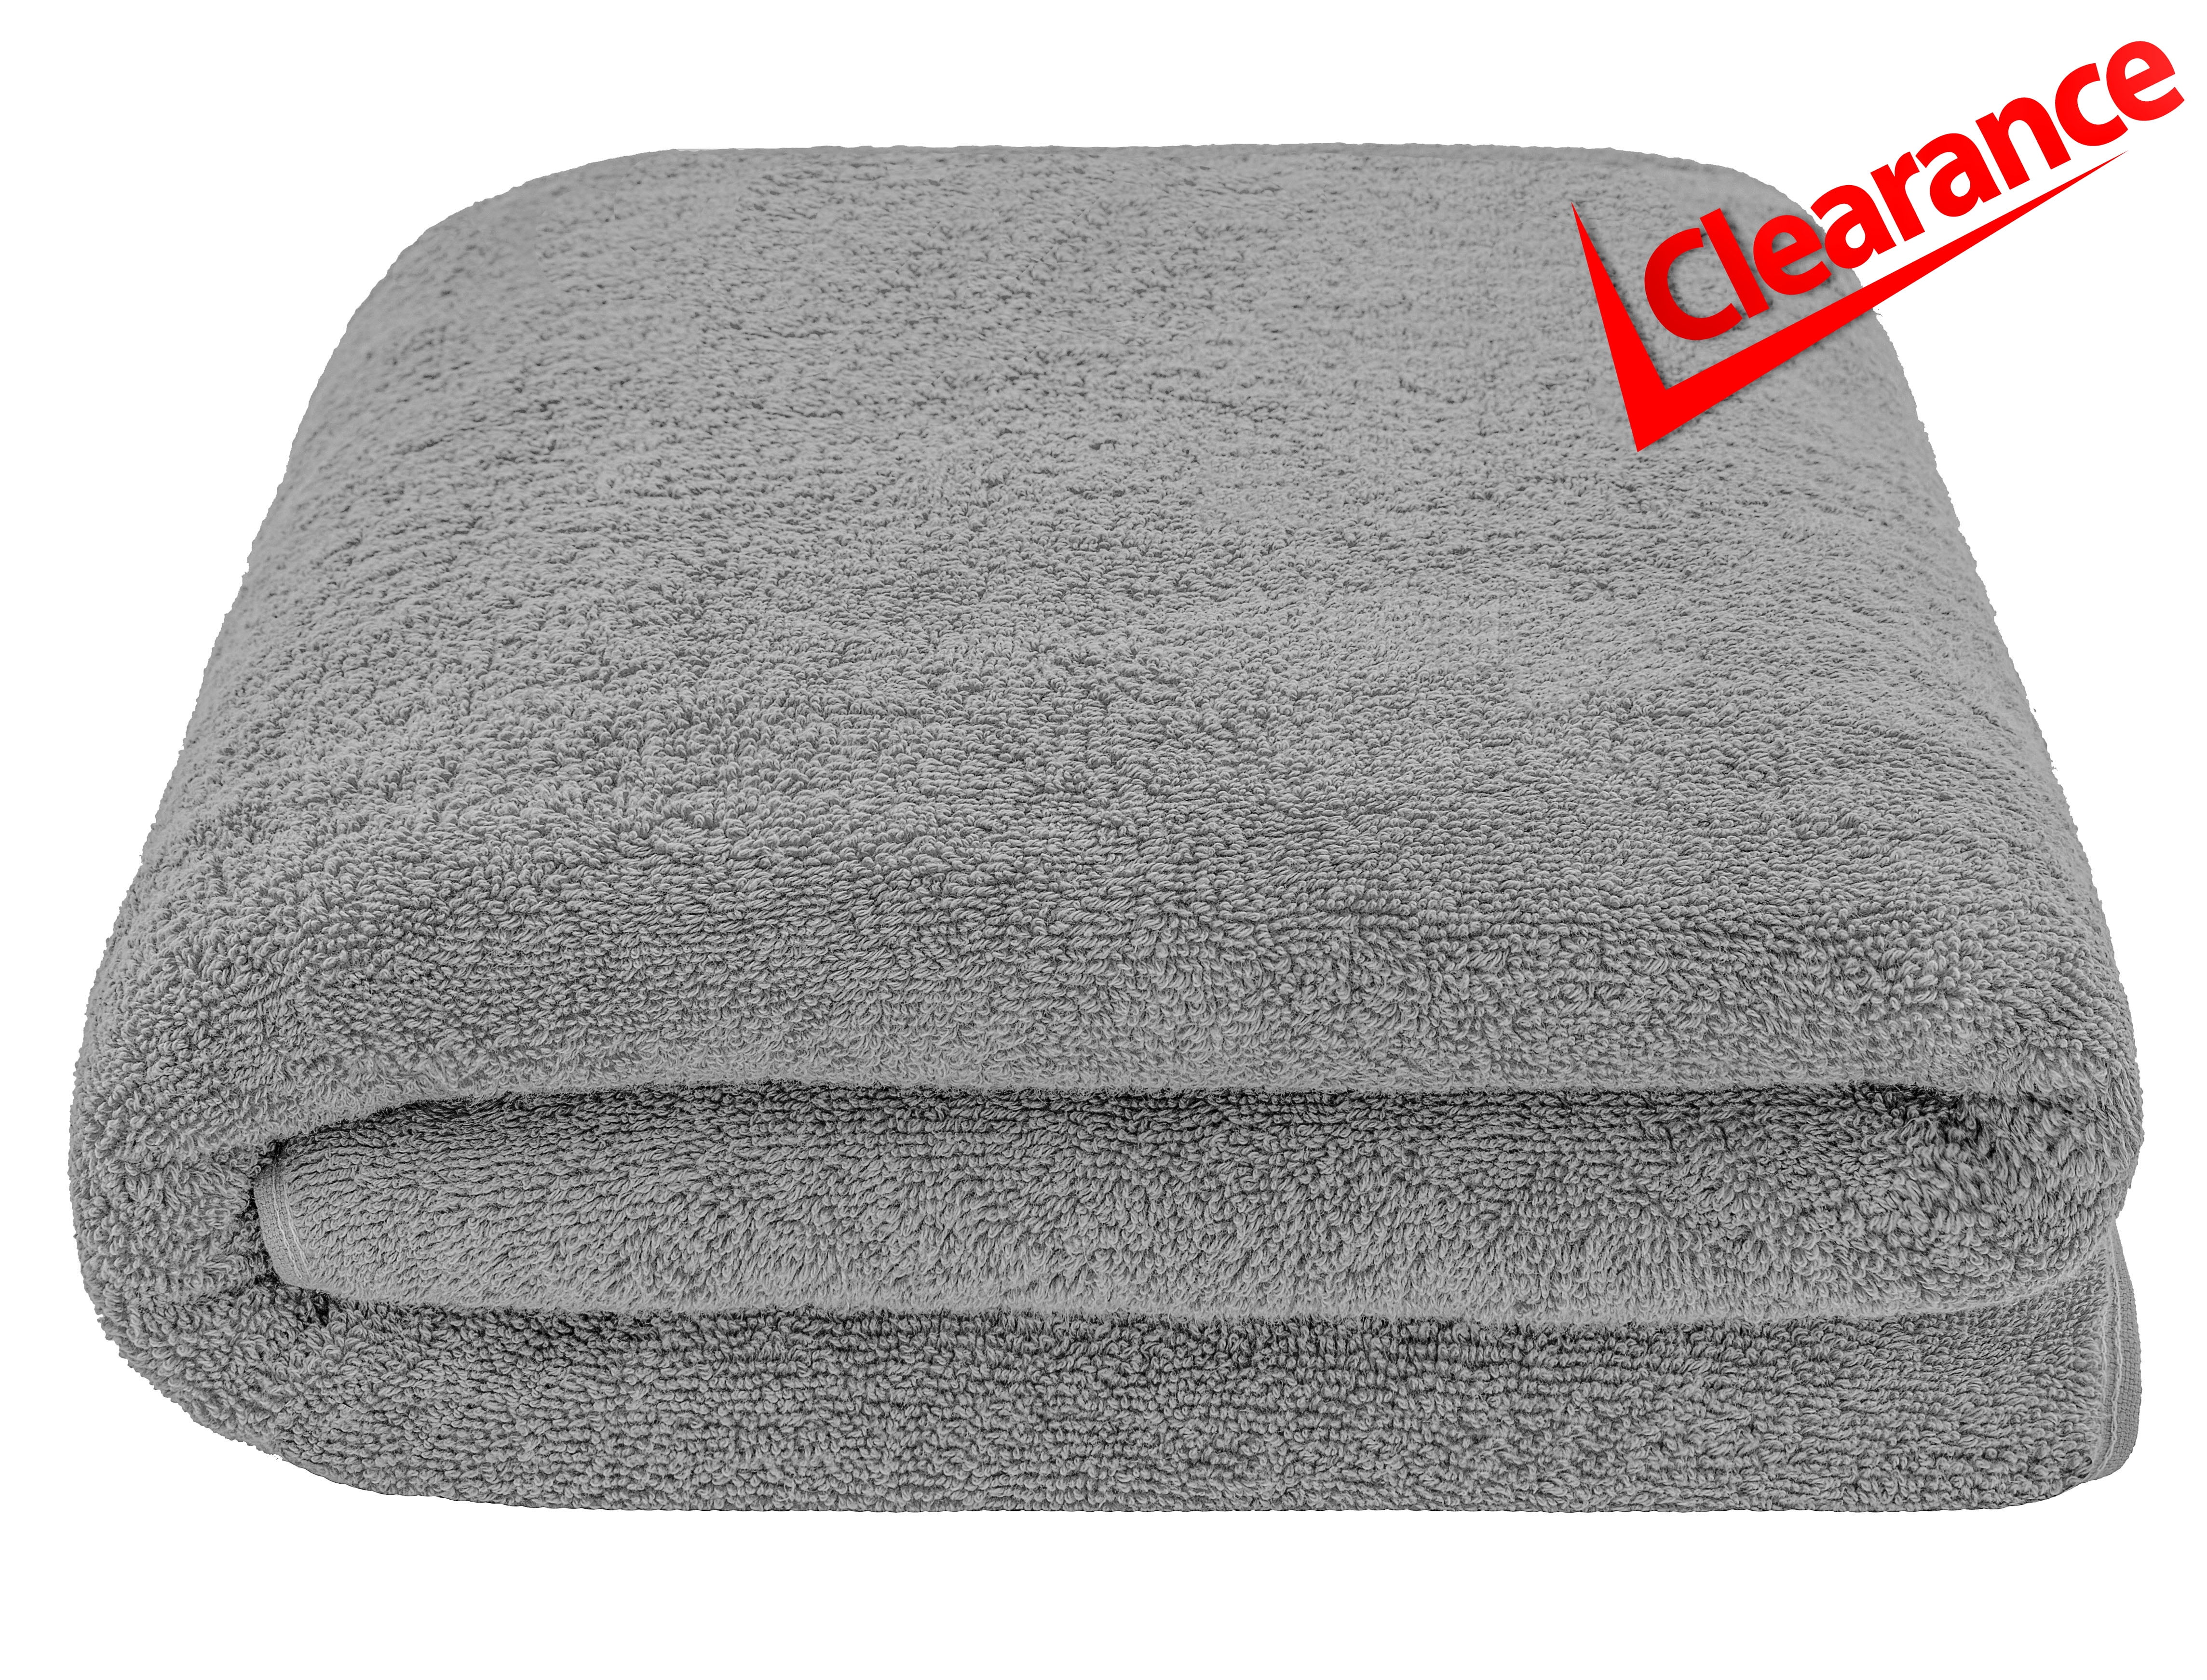 Extra Large Oversized Bath Towel 100% Cotton Turkish Towel Light Grey 40x80" 